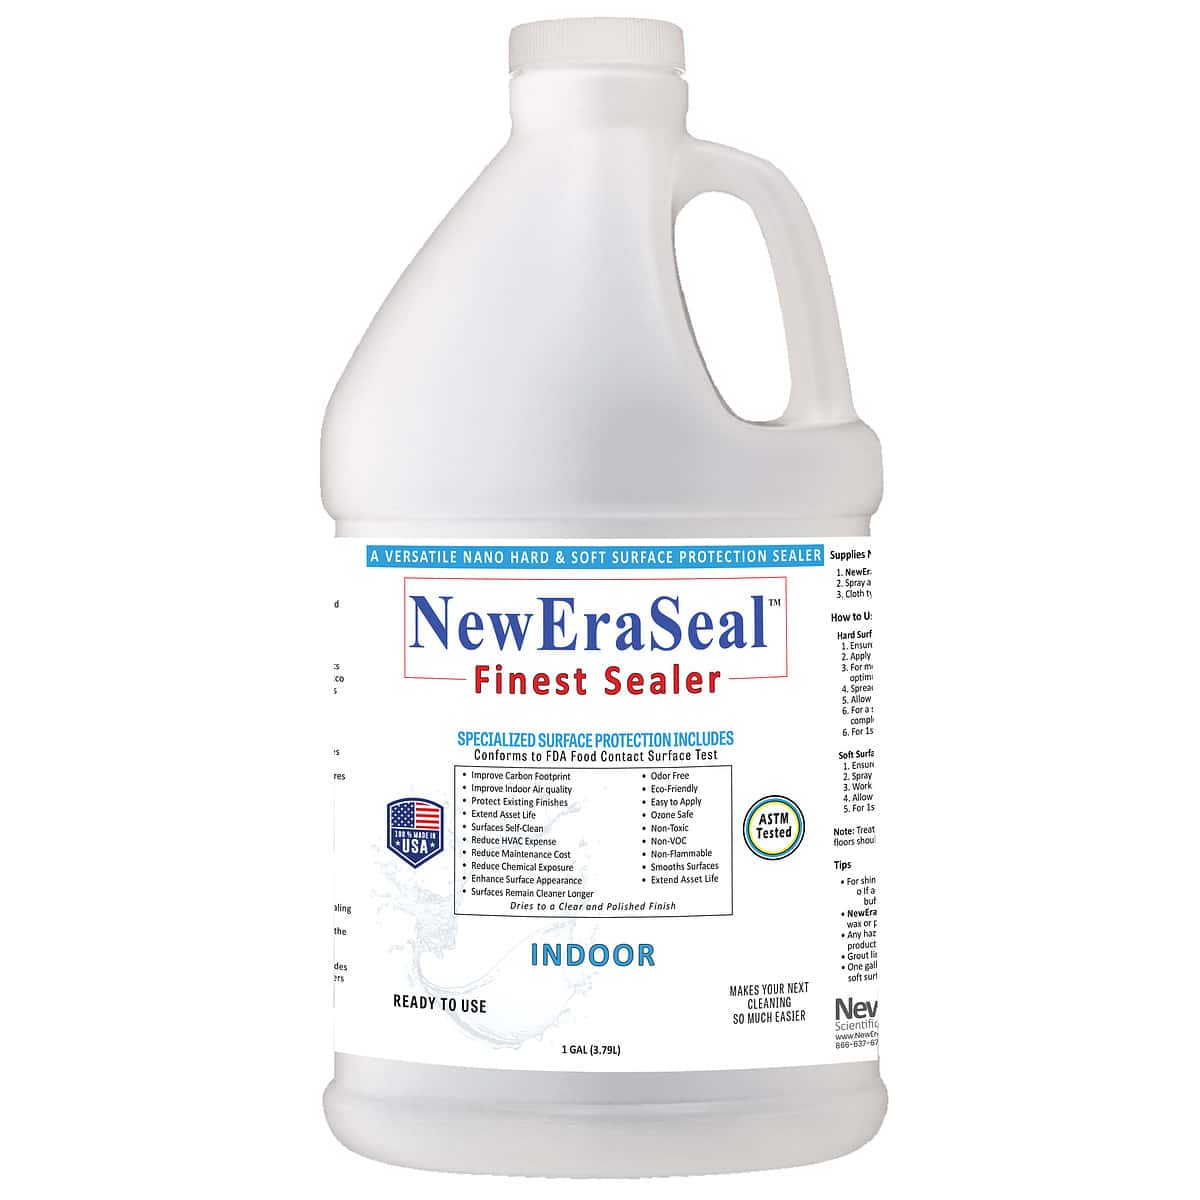 NewEraSeal Finest Sealer 1-gallon bottle